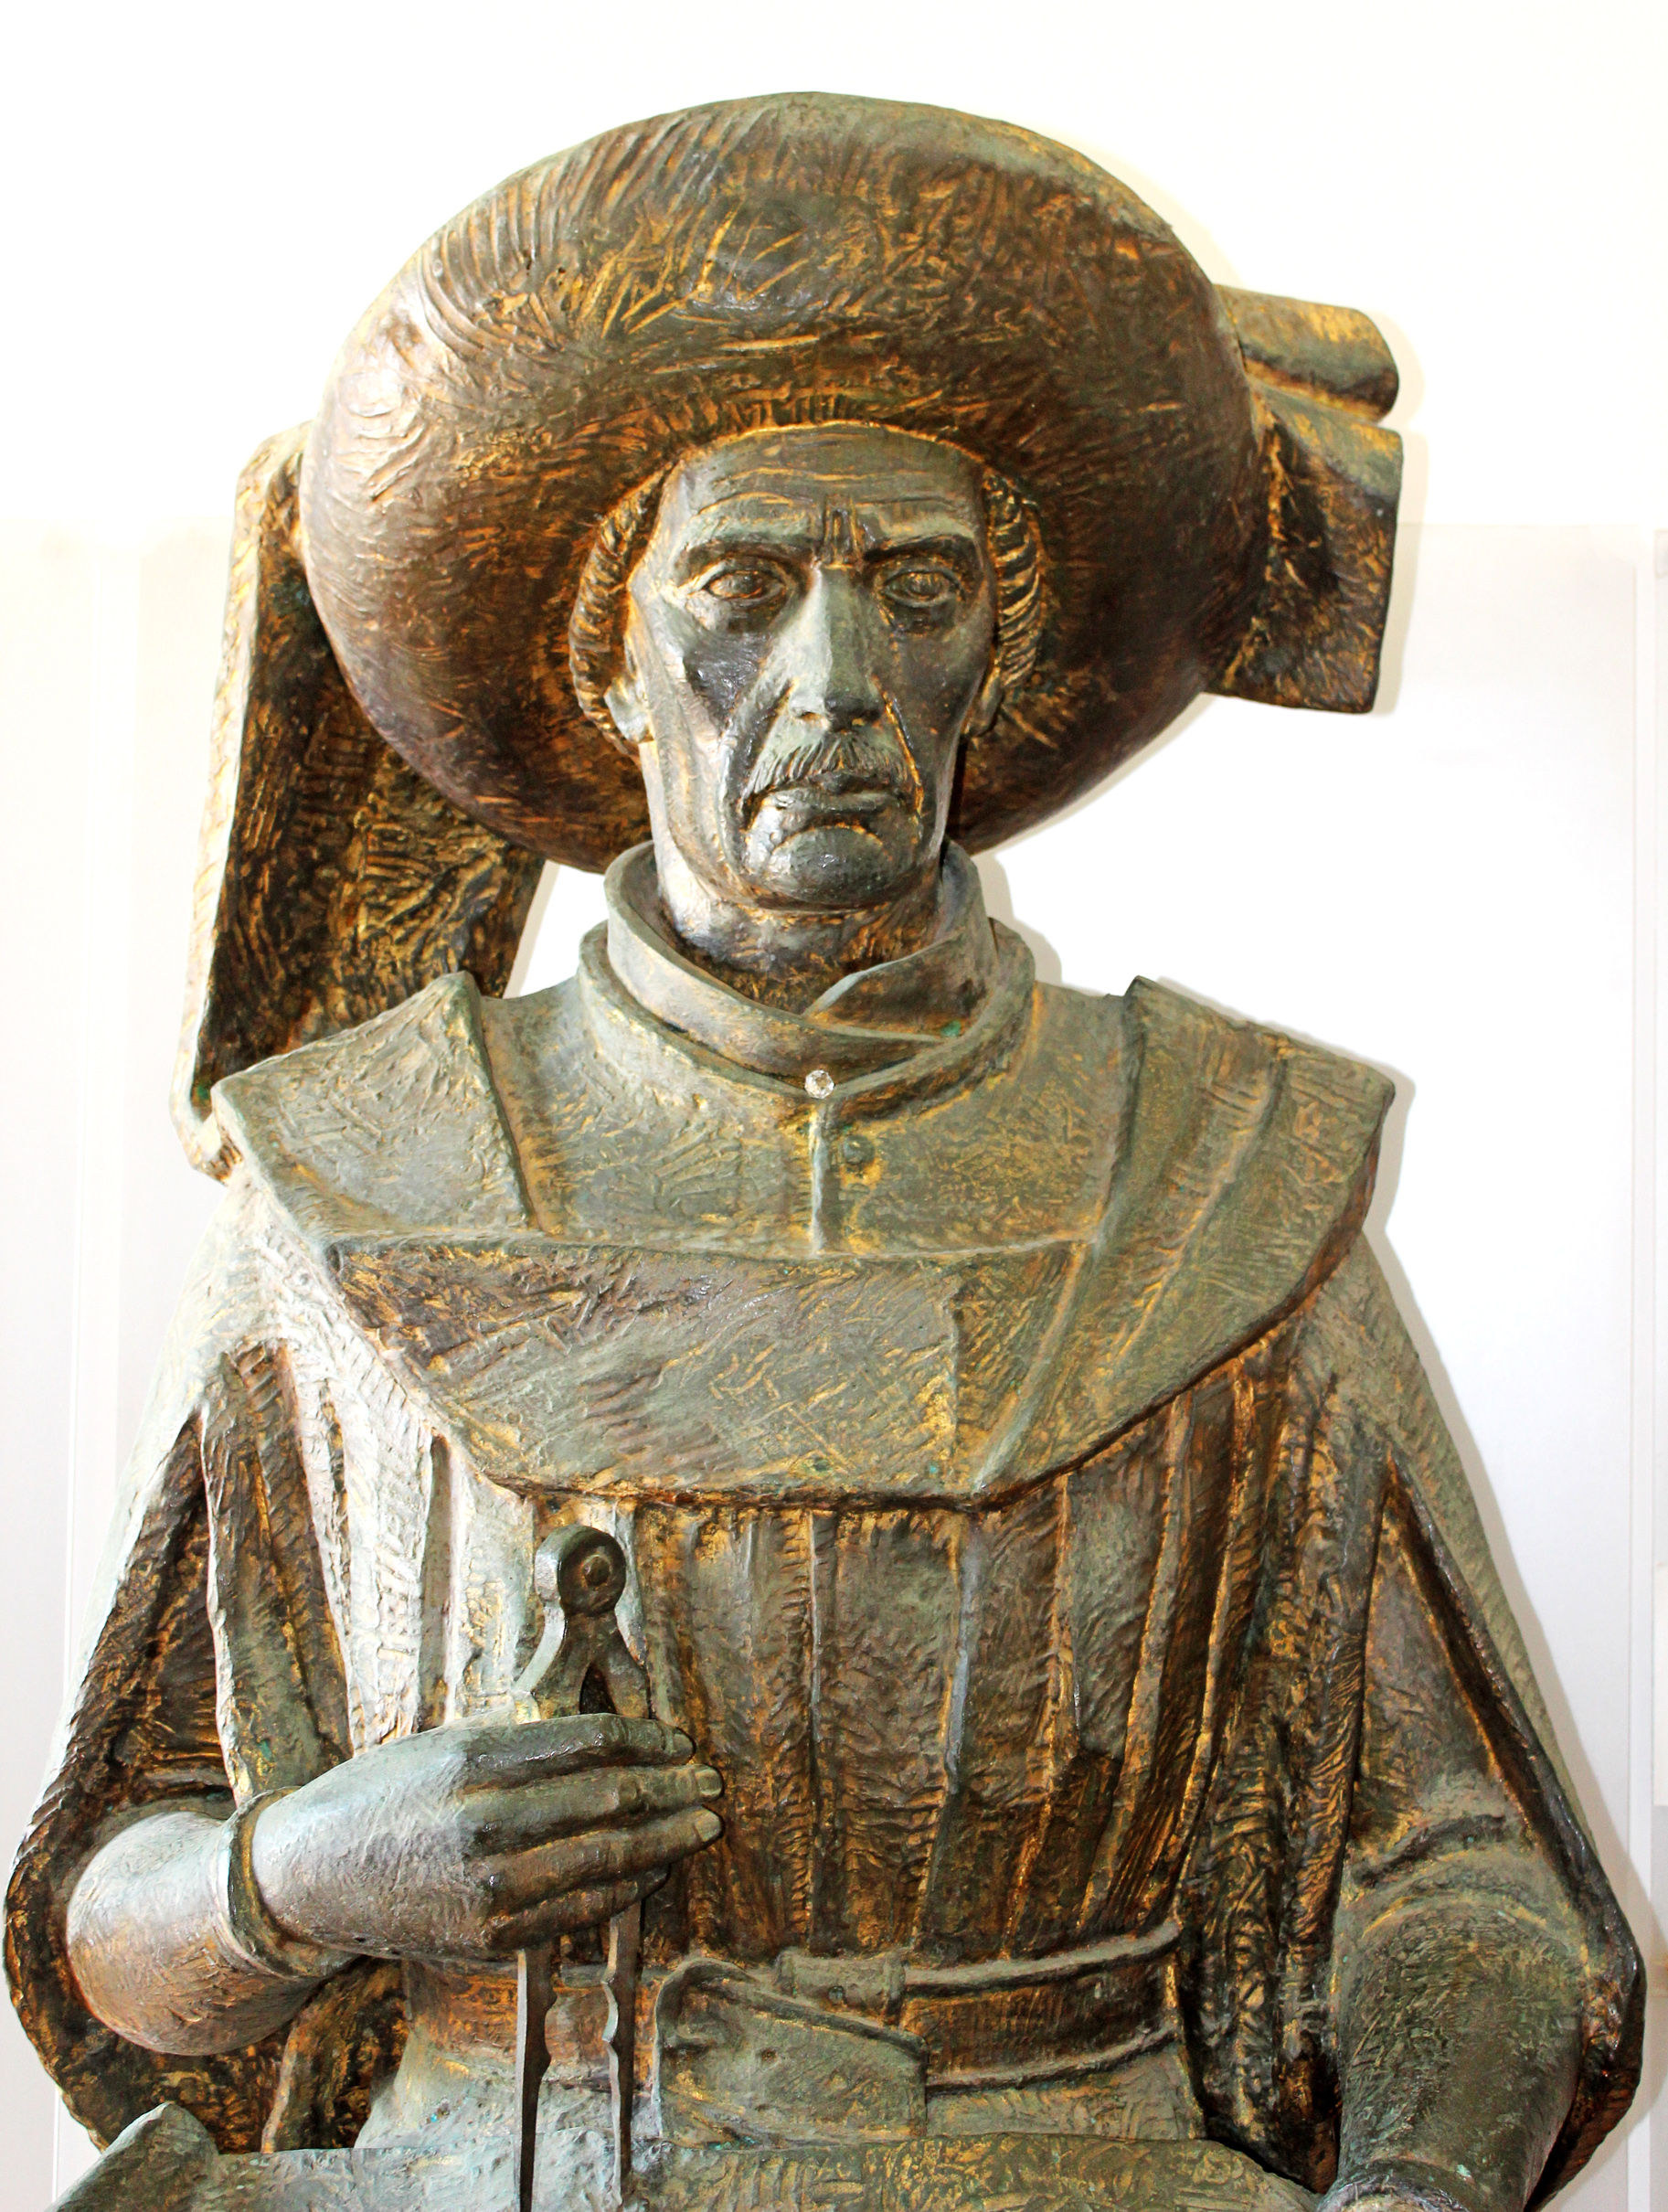 Prince henry the navigator statue - illustrious portuguese - european photo